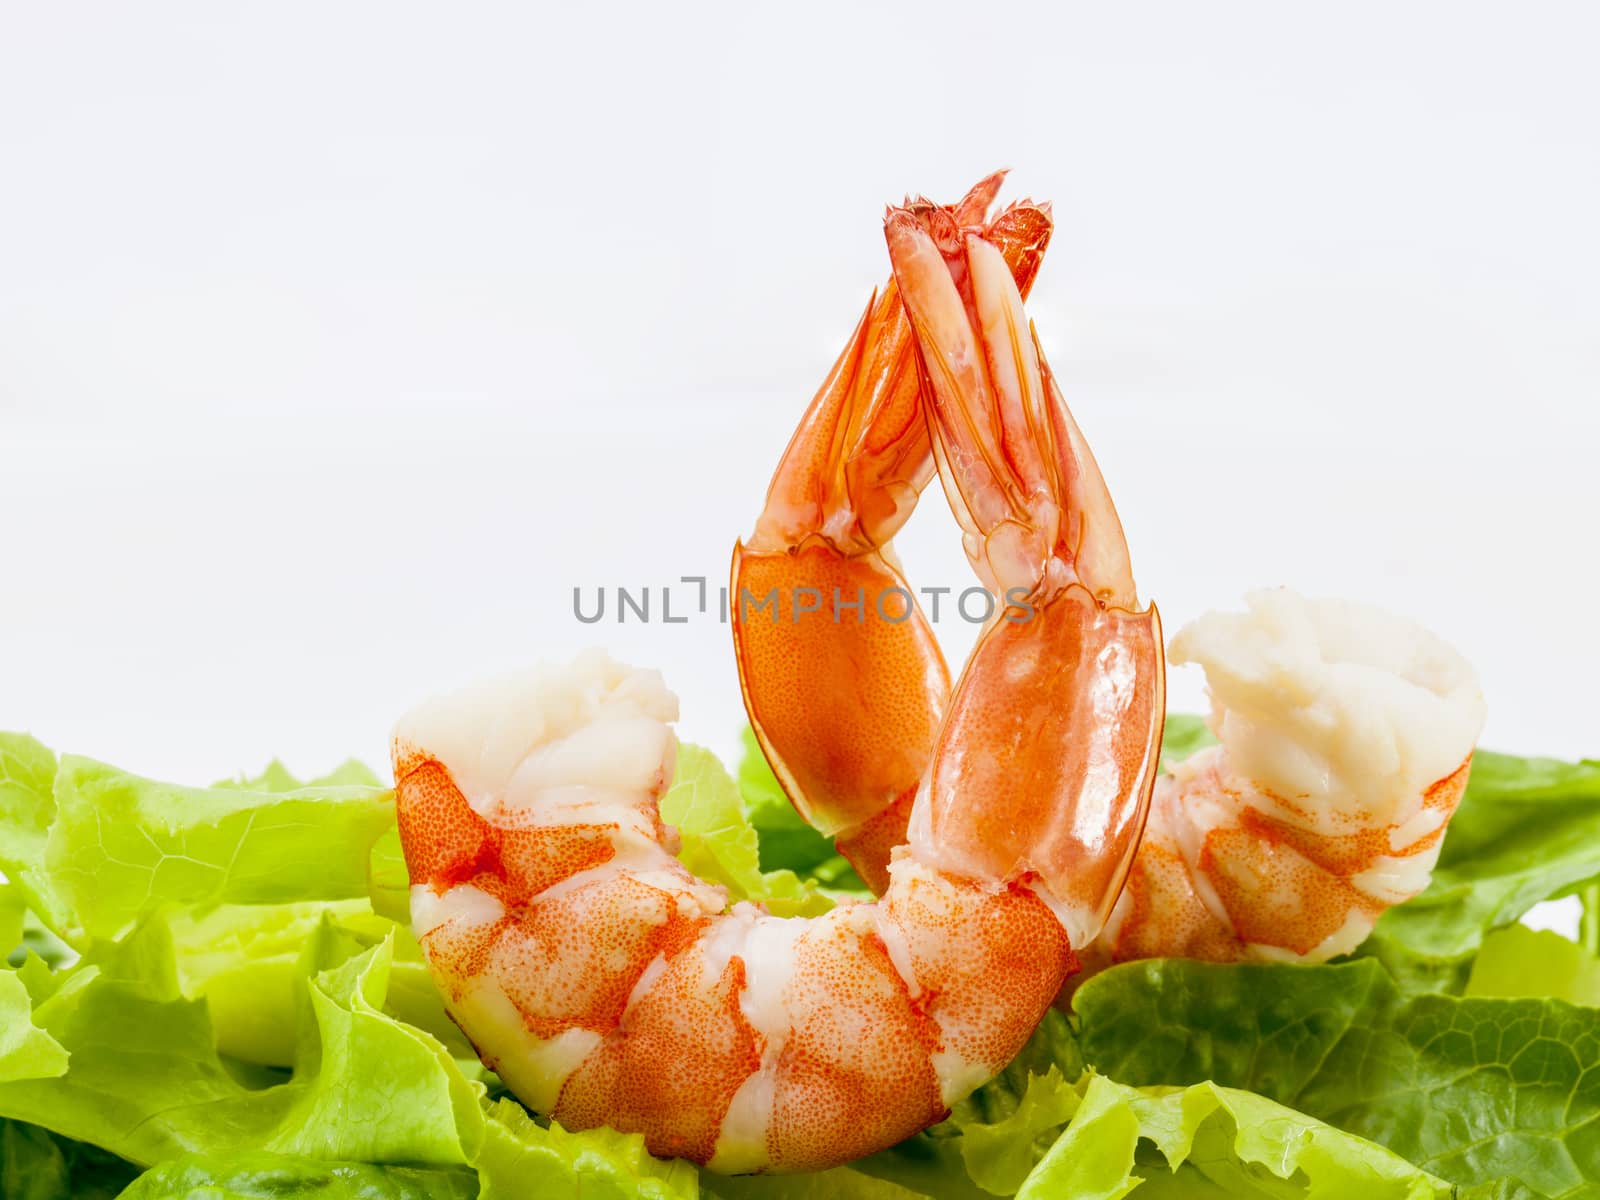 Mixed green salad with shrimps